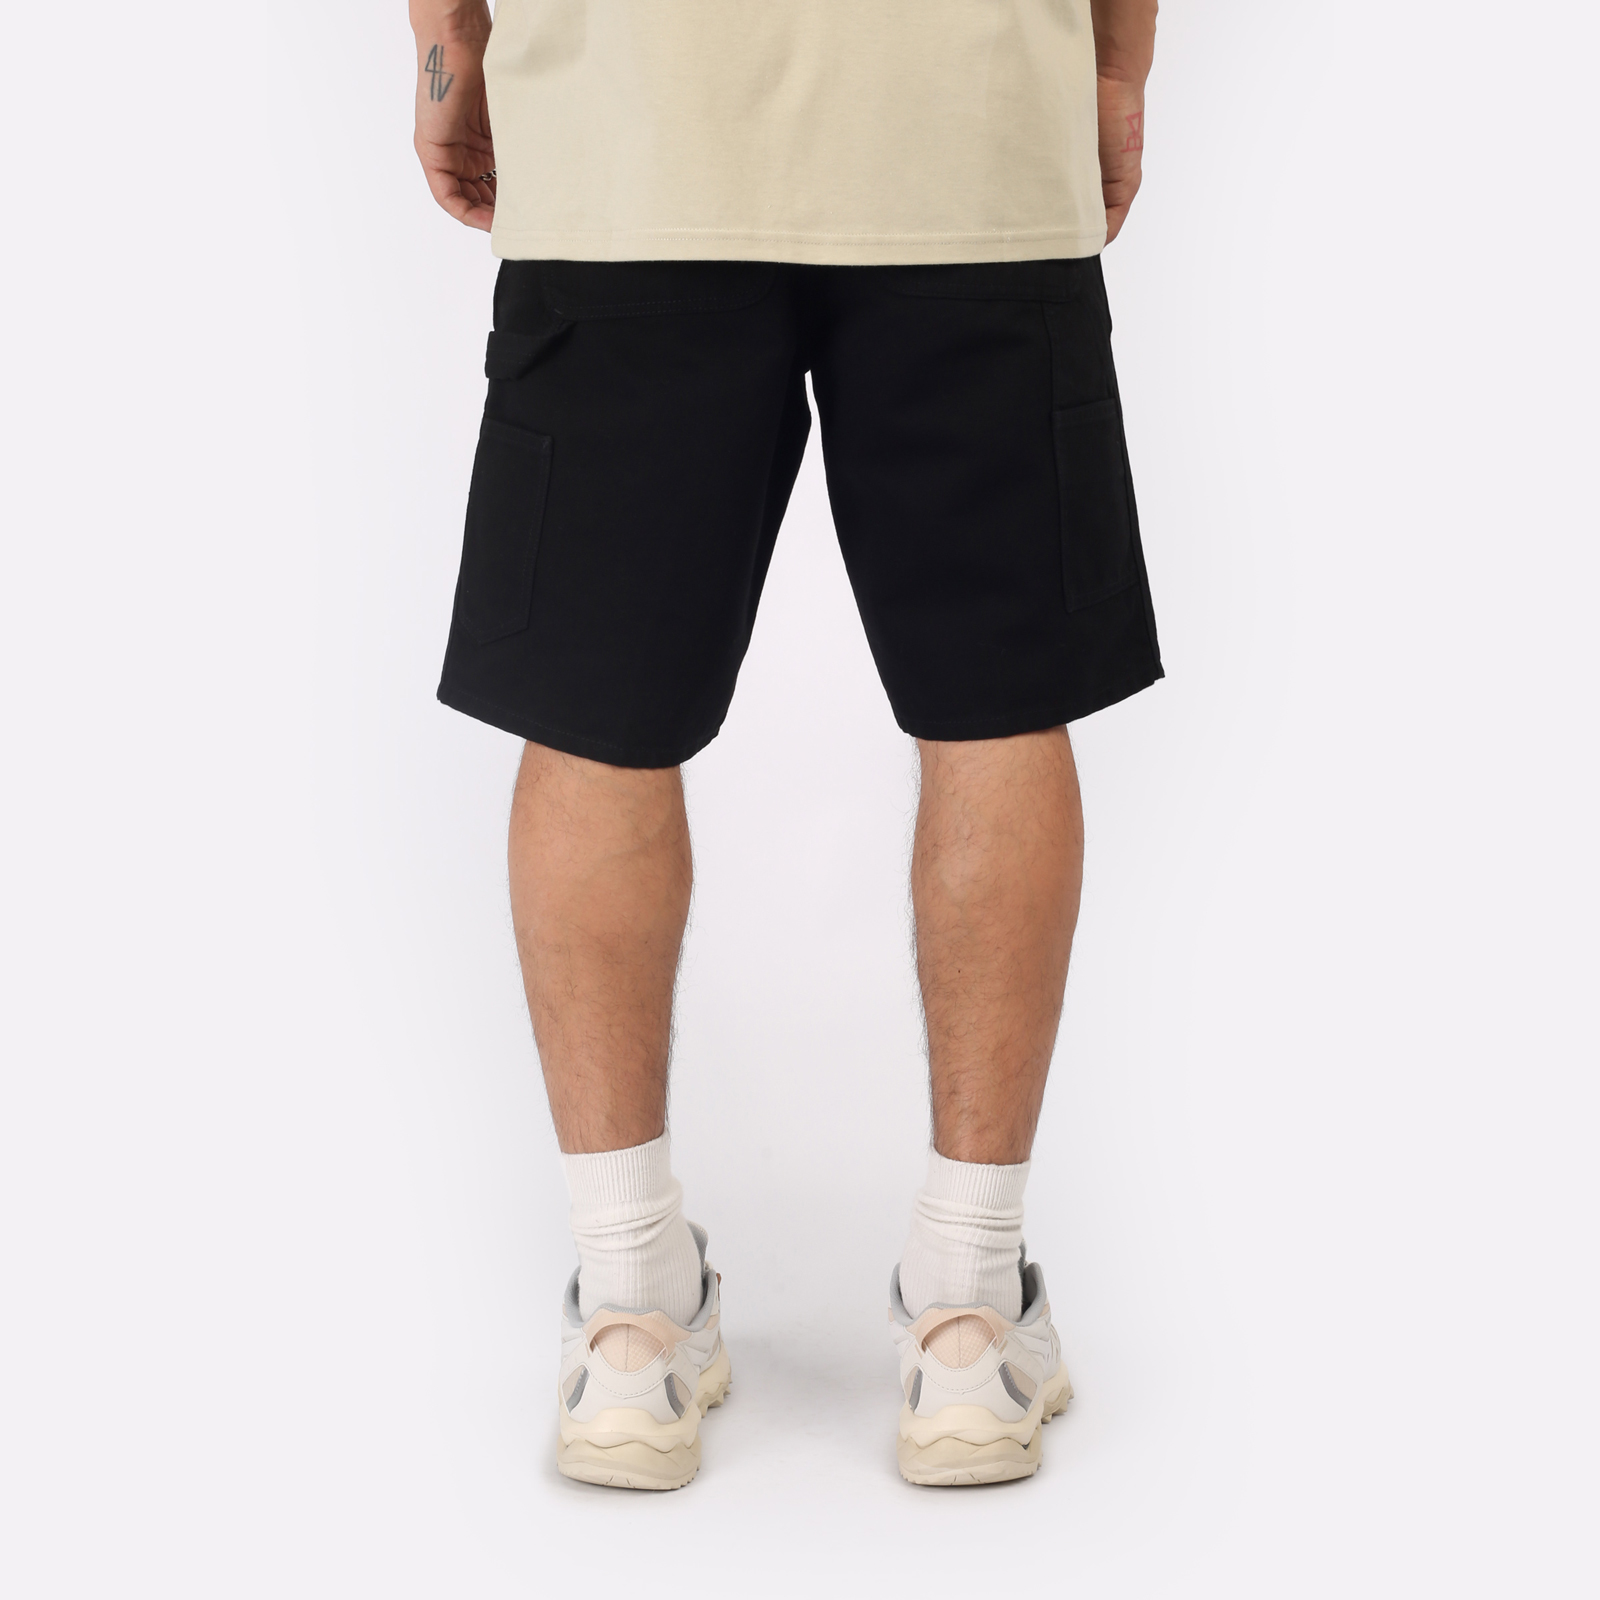 Мужские шорты Carhartt WIP Single Knee Short (I027942-black)  - цена, описание, фото 2